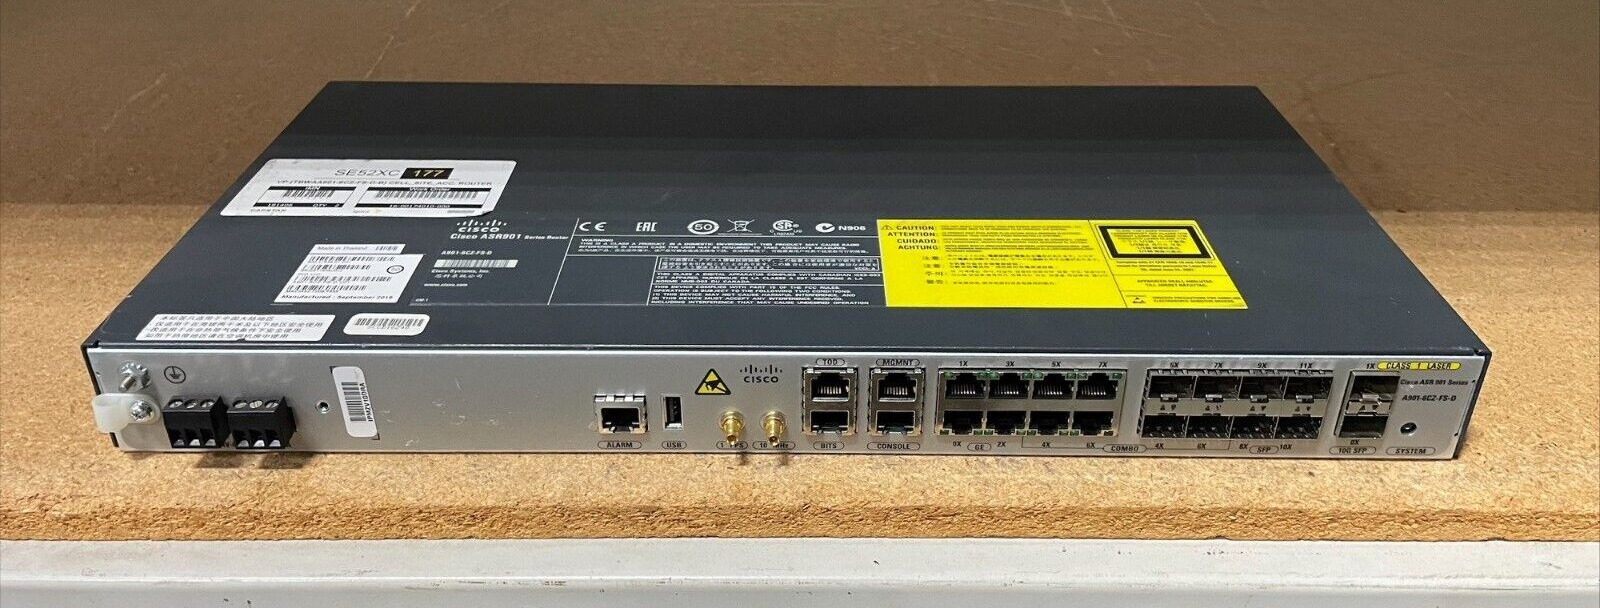 Cisco A901-6CZ-FS-D ASR 901 Series Aggregation Services Router - 1 Year Warranty